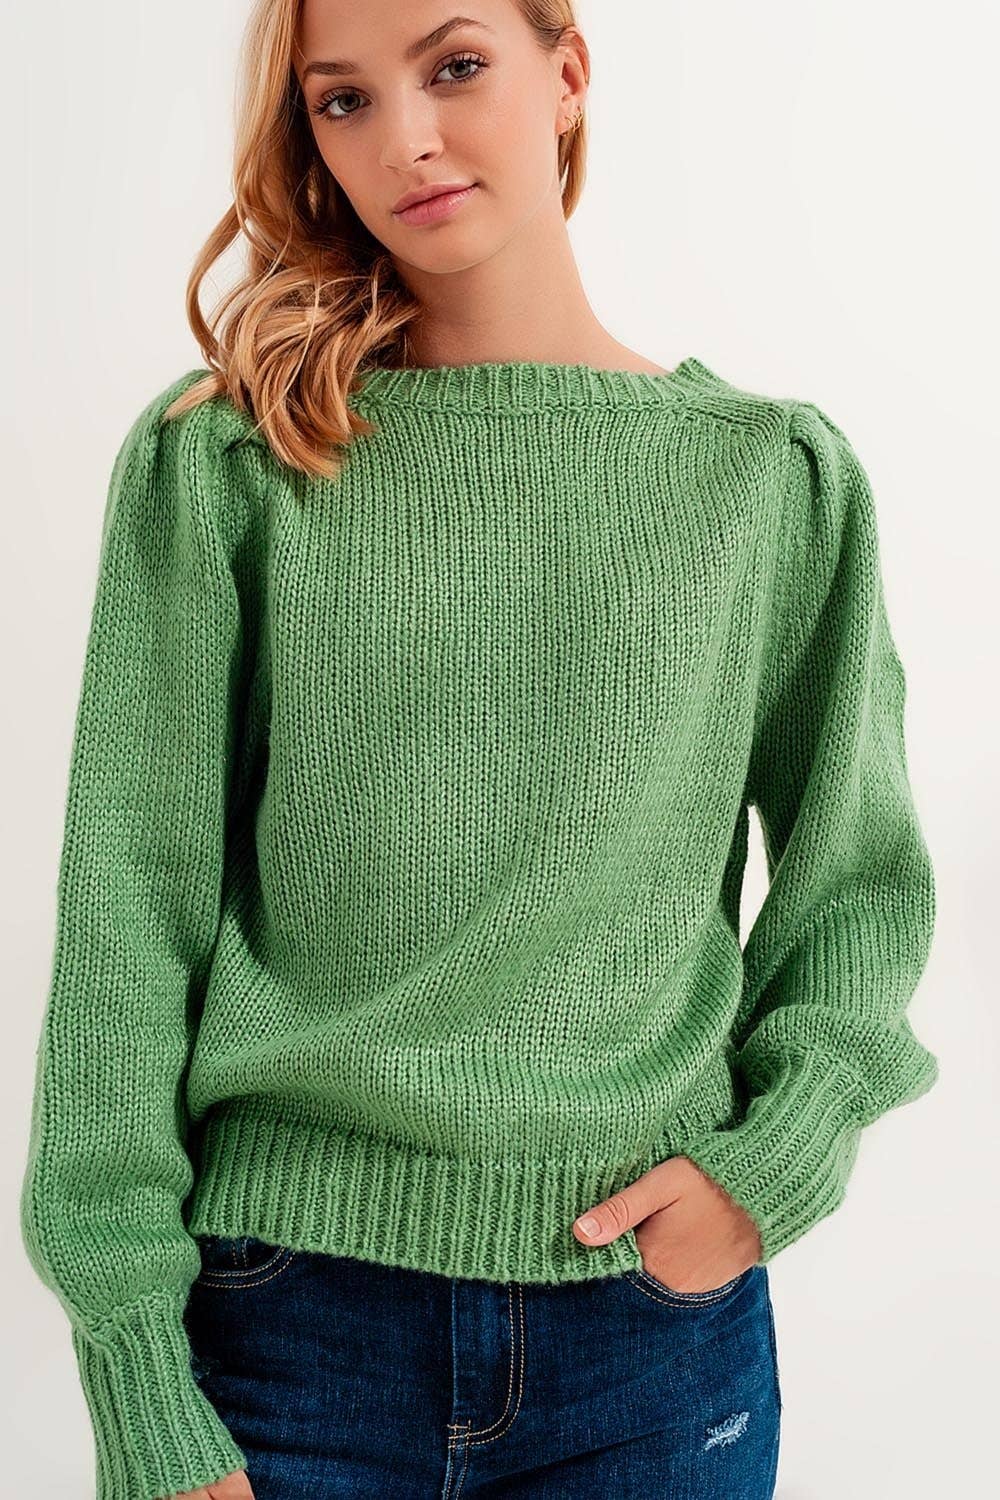 Pleat sleeve cropped sweater in green